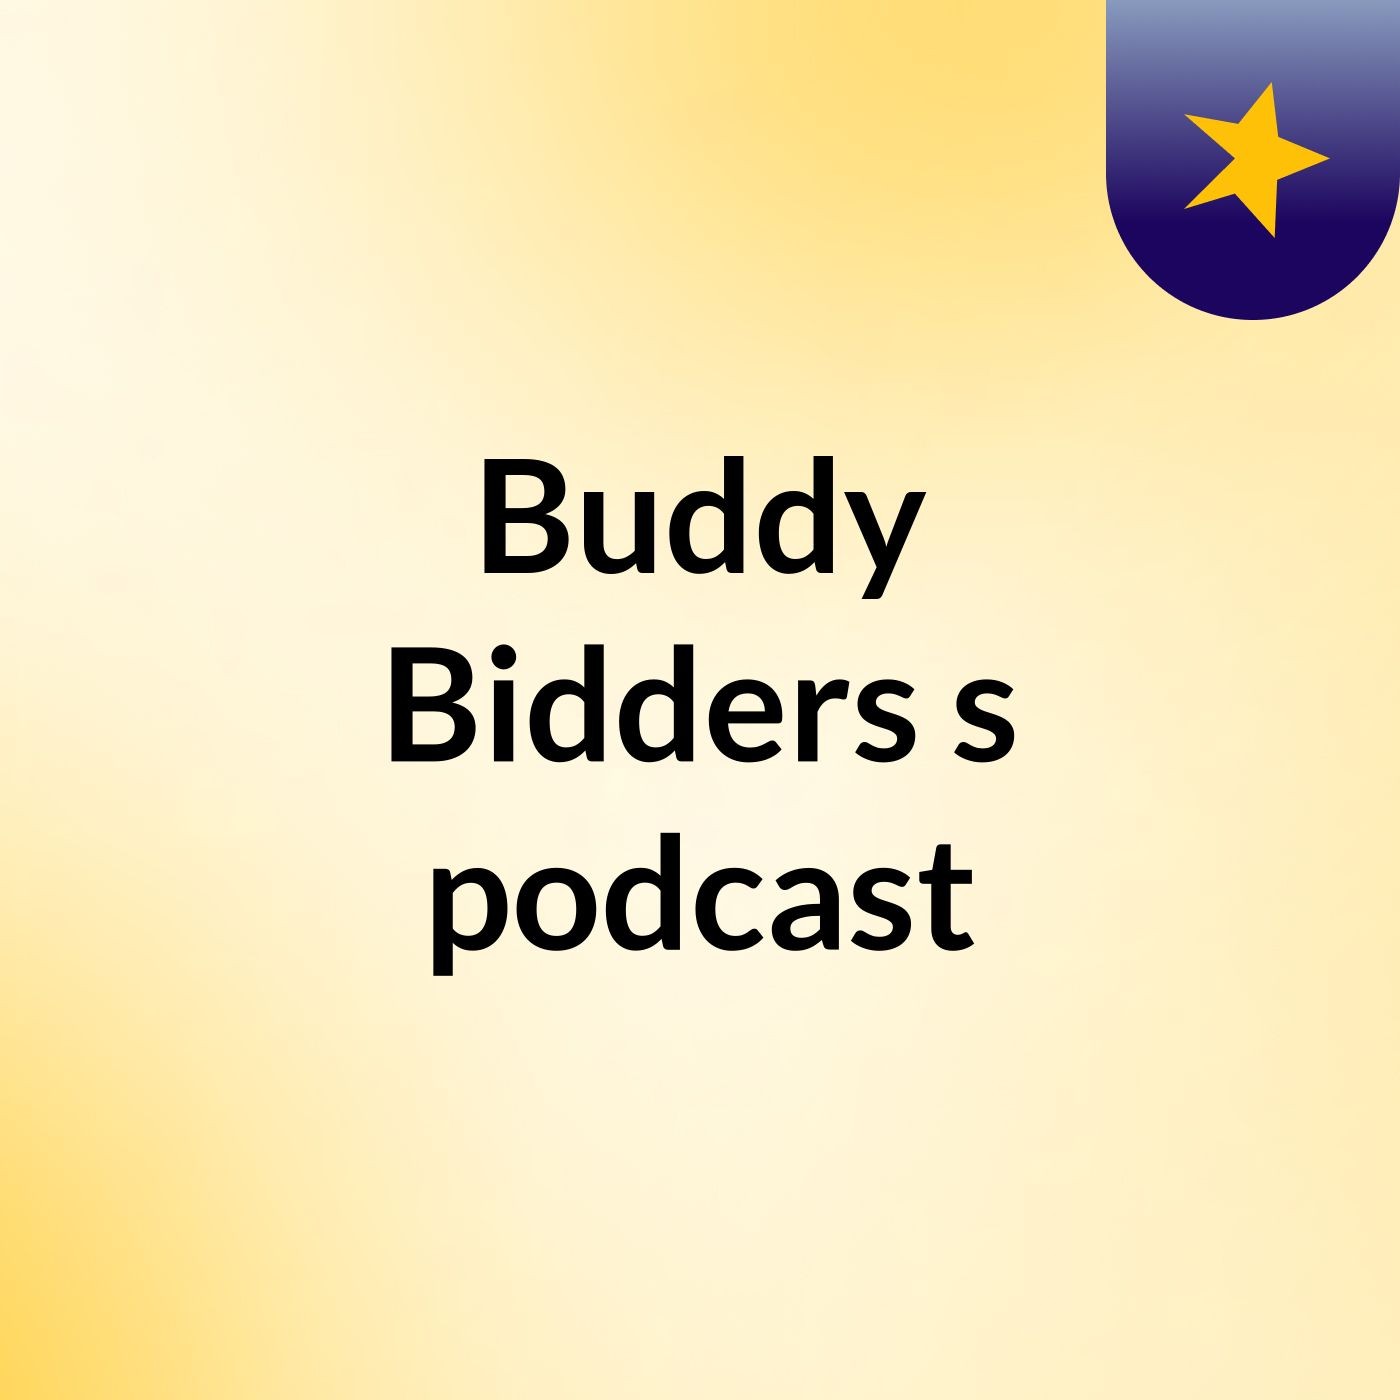 Episode 4 - Buddy Bidders's podcast